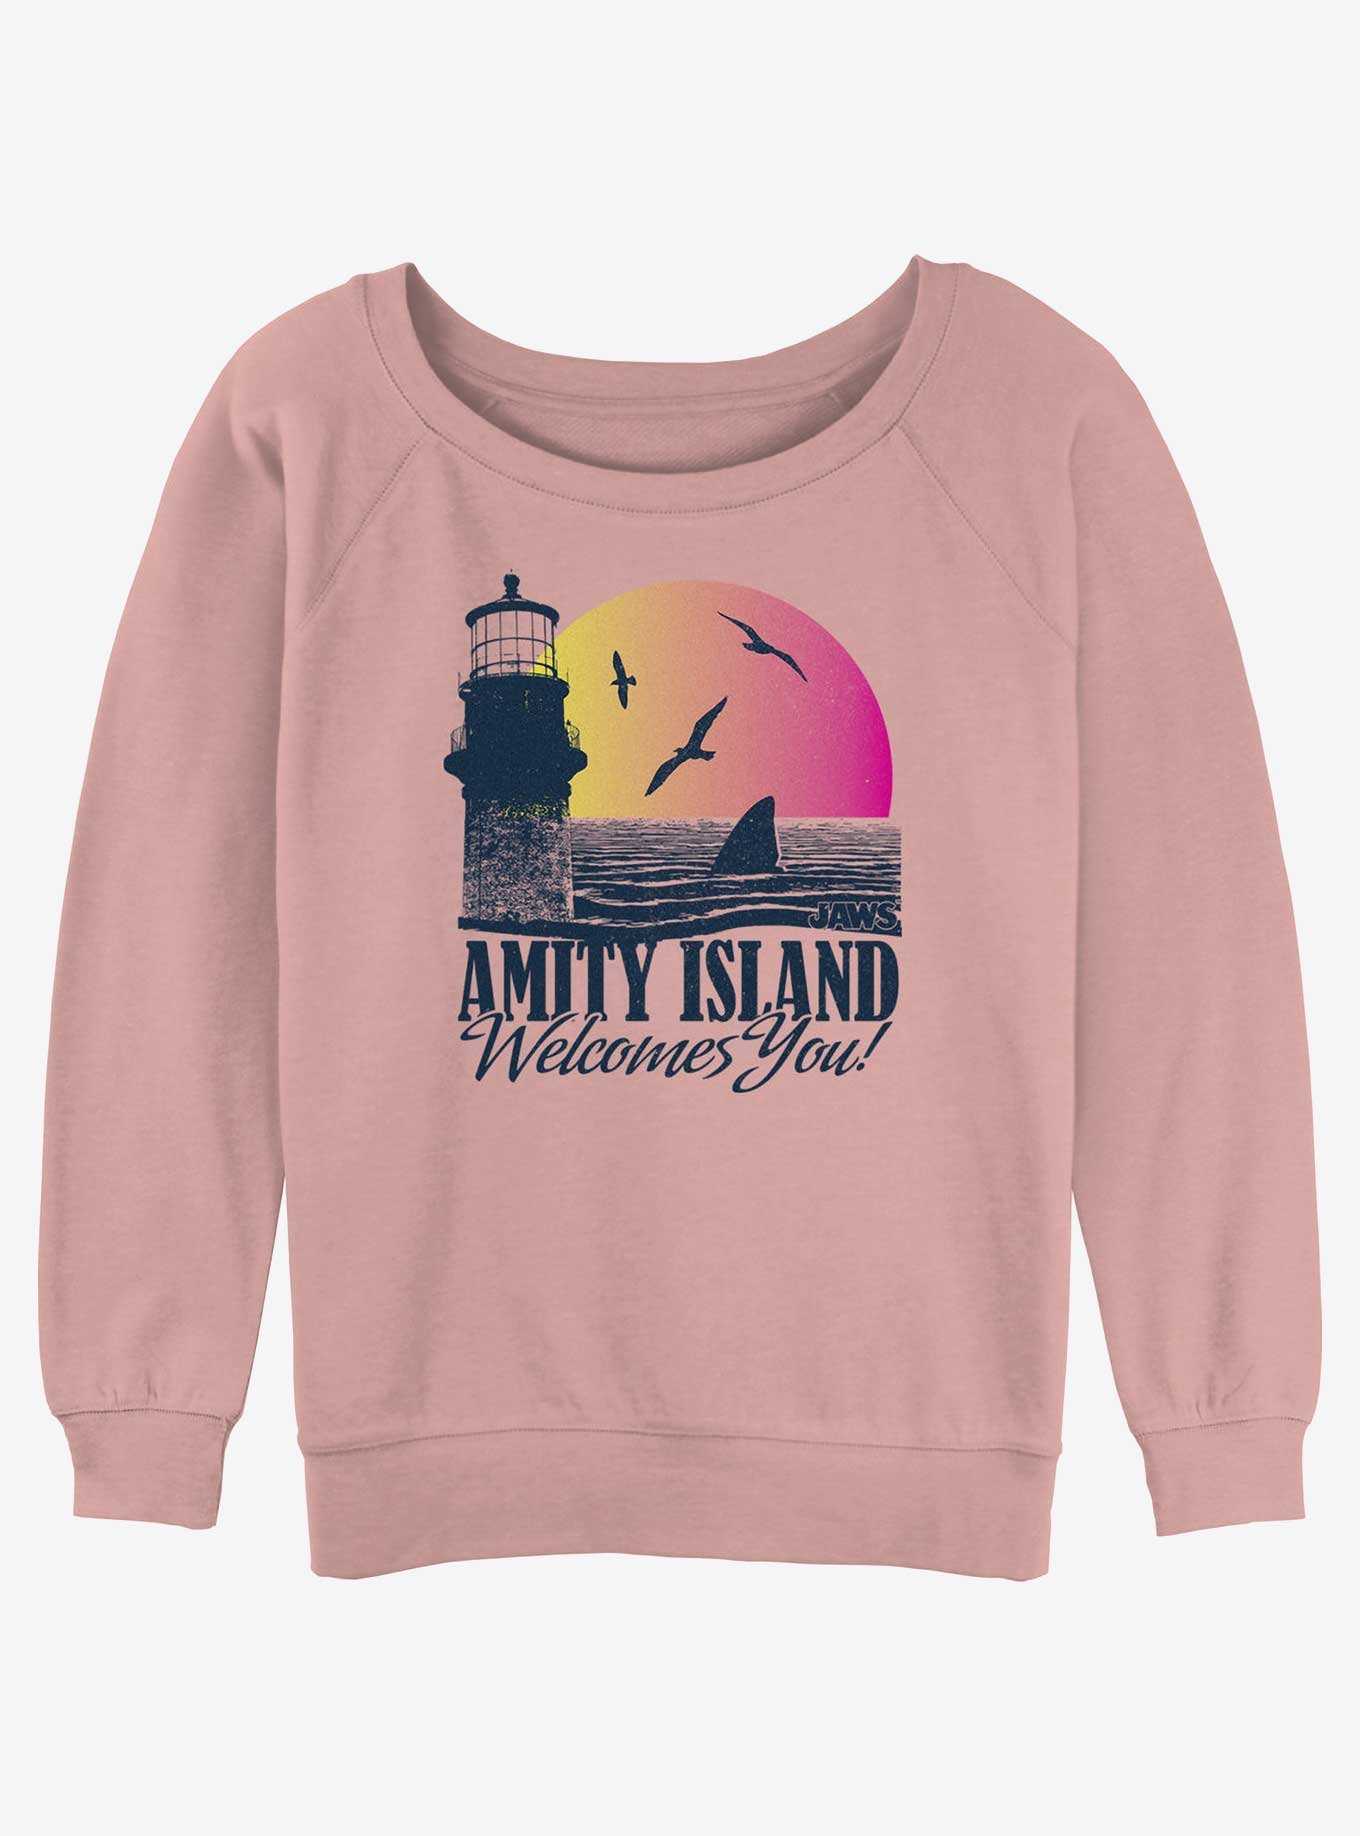 Jaws Amity Island Welcomes You Girls Slouchy Sweatshirt, , hi-res